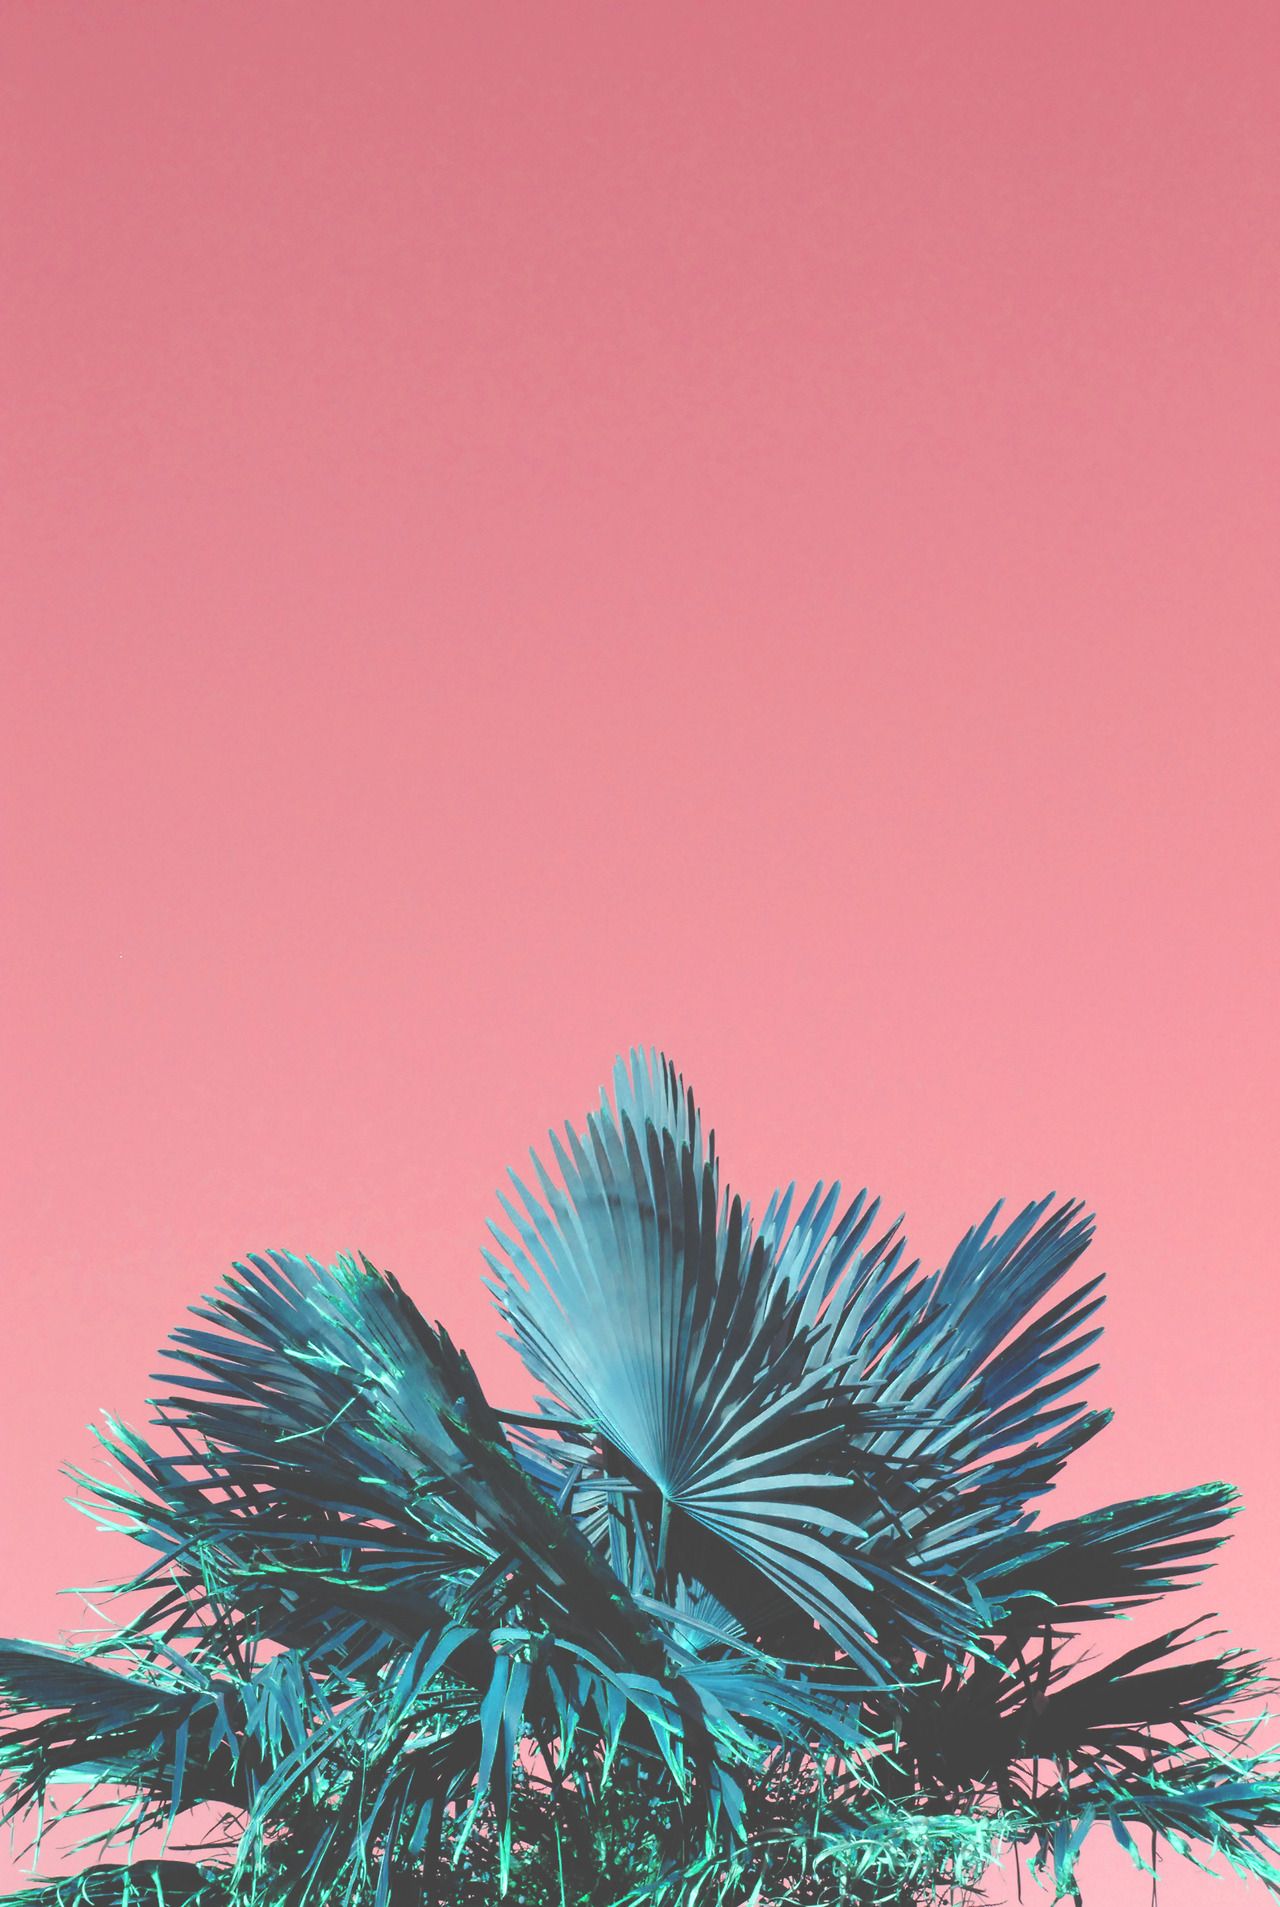 nasty c wallpaper,pink,tree,plant,turquoise,palm tree